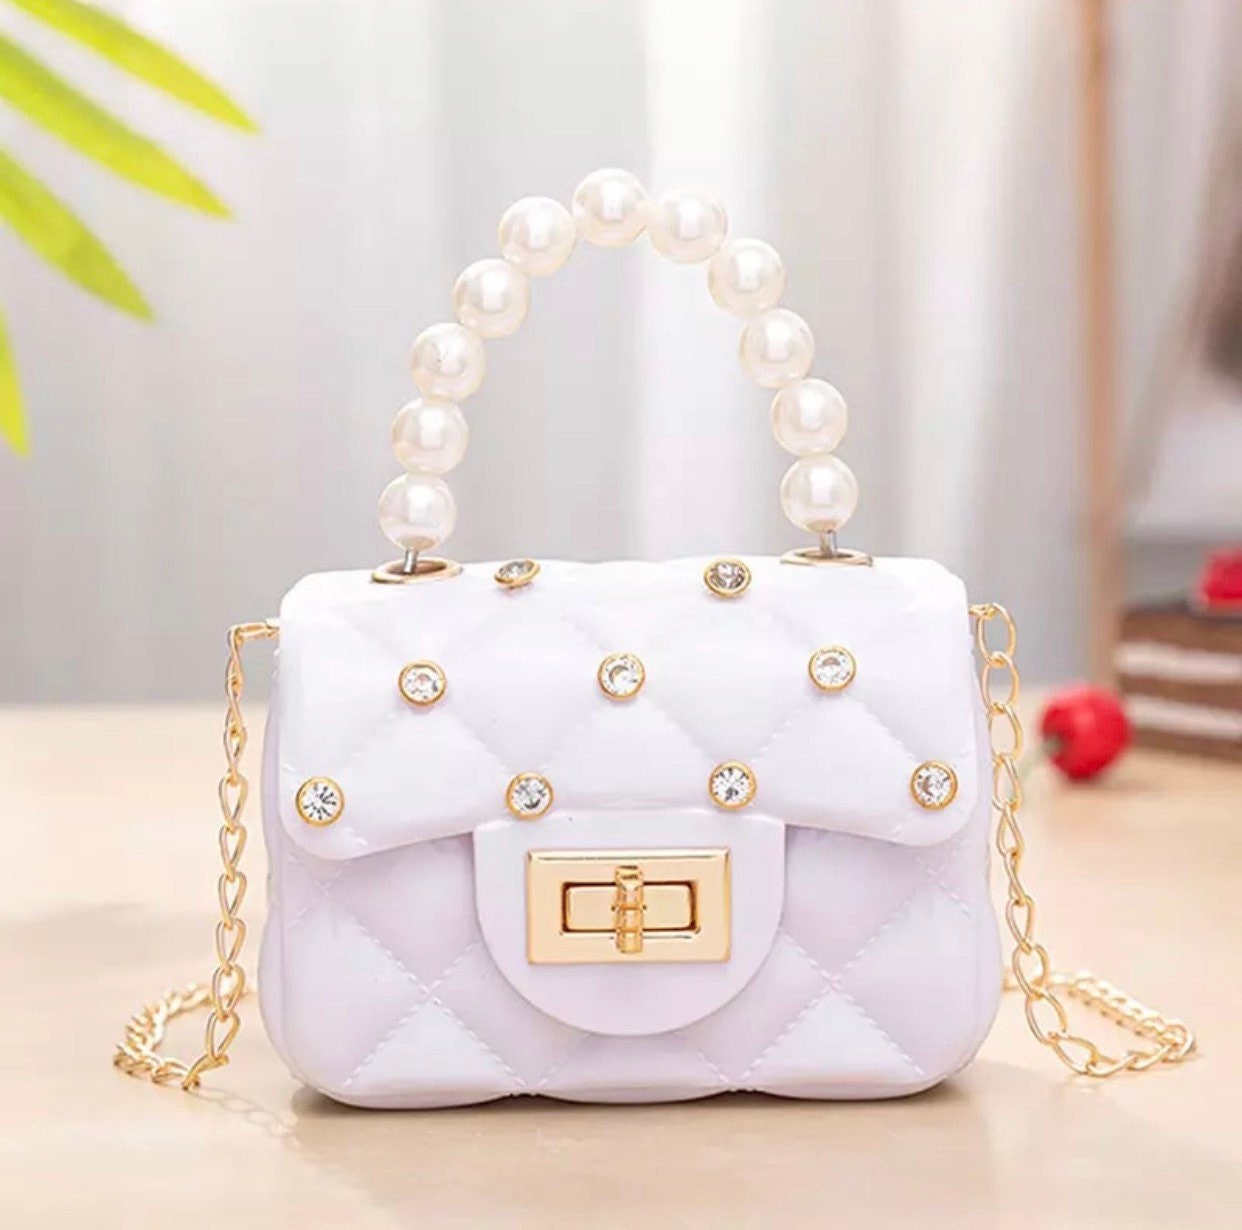 Hosby 2 Pcs Bag Charms for Handbags, Women's Flower Bag Chains Pendant Accessories for Wallet Purse Shoulder Bag Decorations